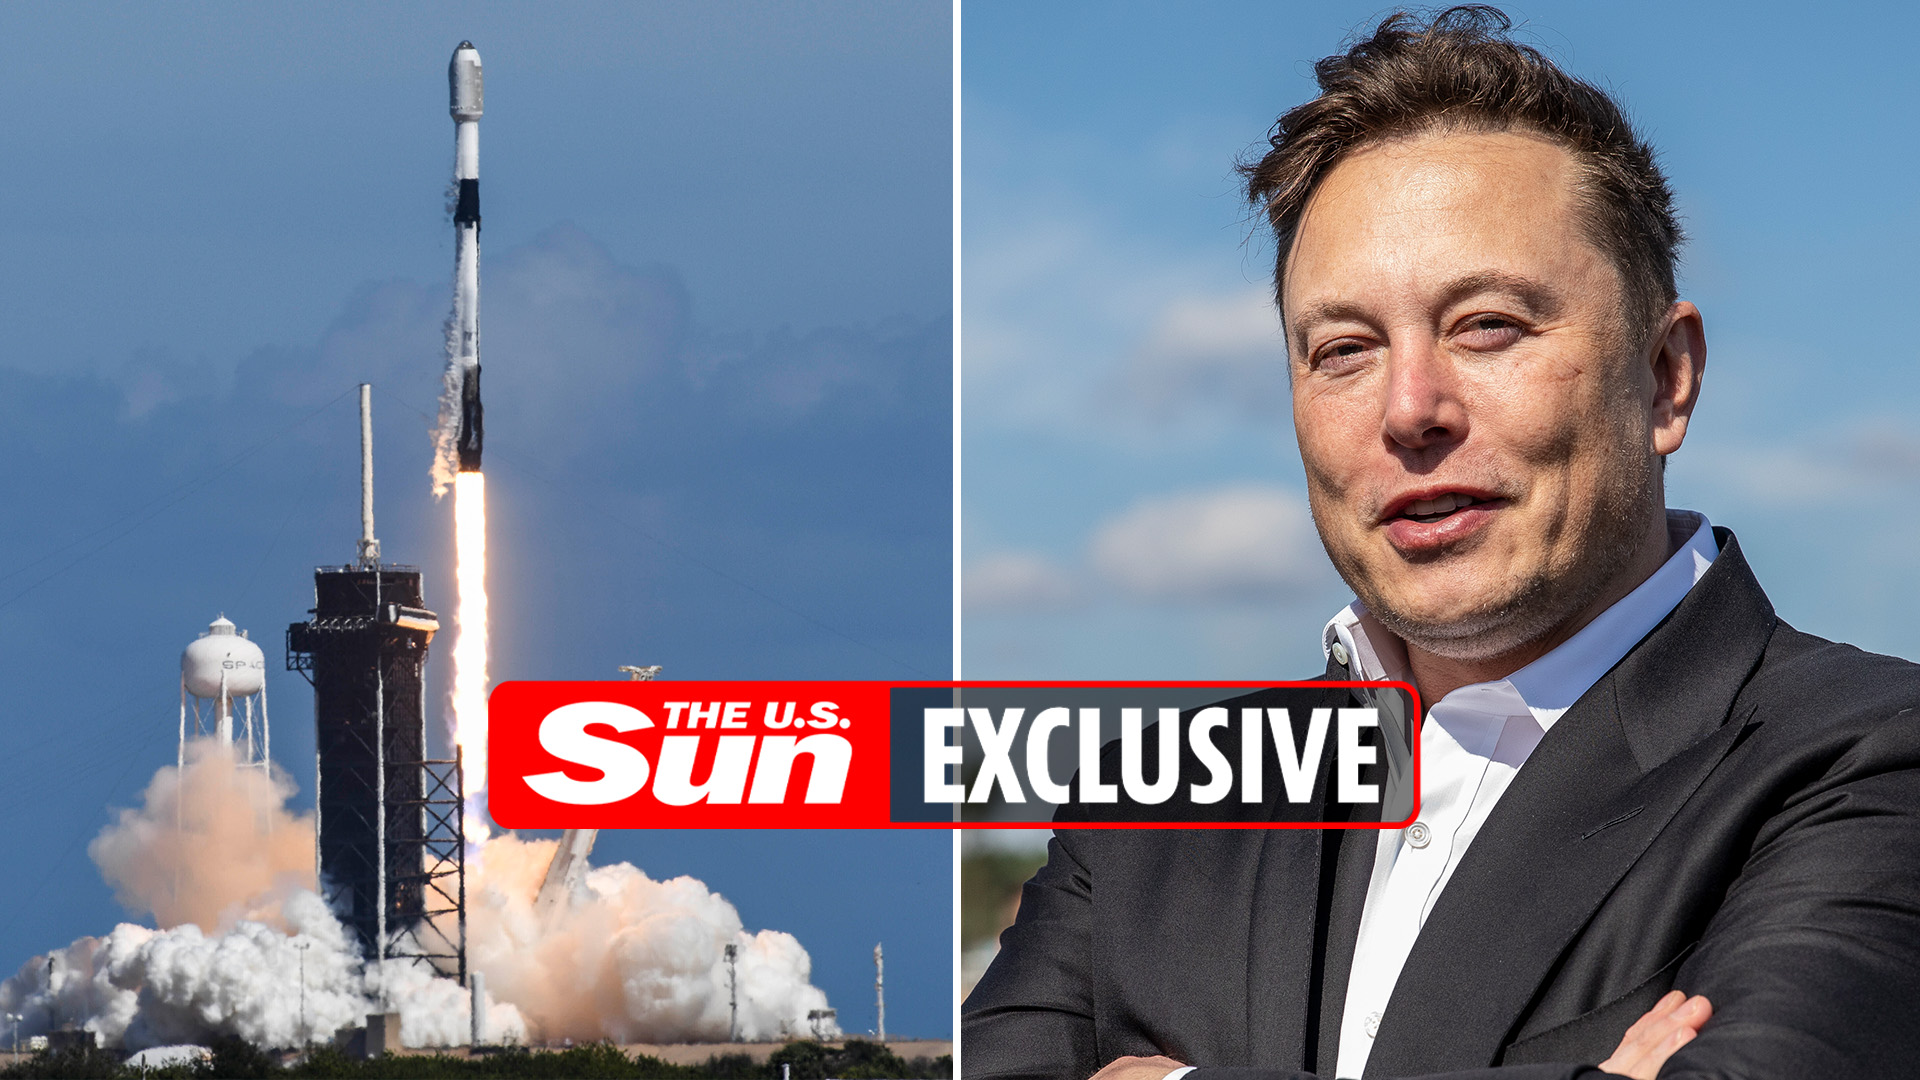 Elon Musk 'will find it easier to land rocket on Mars than change Twitter'